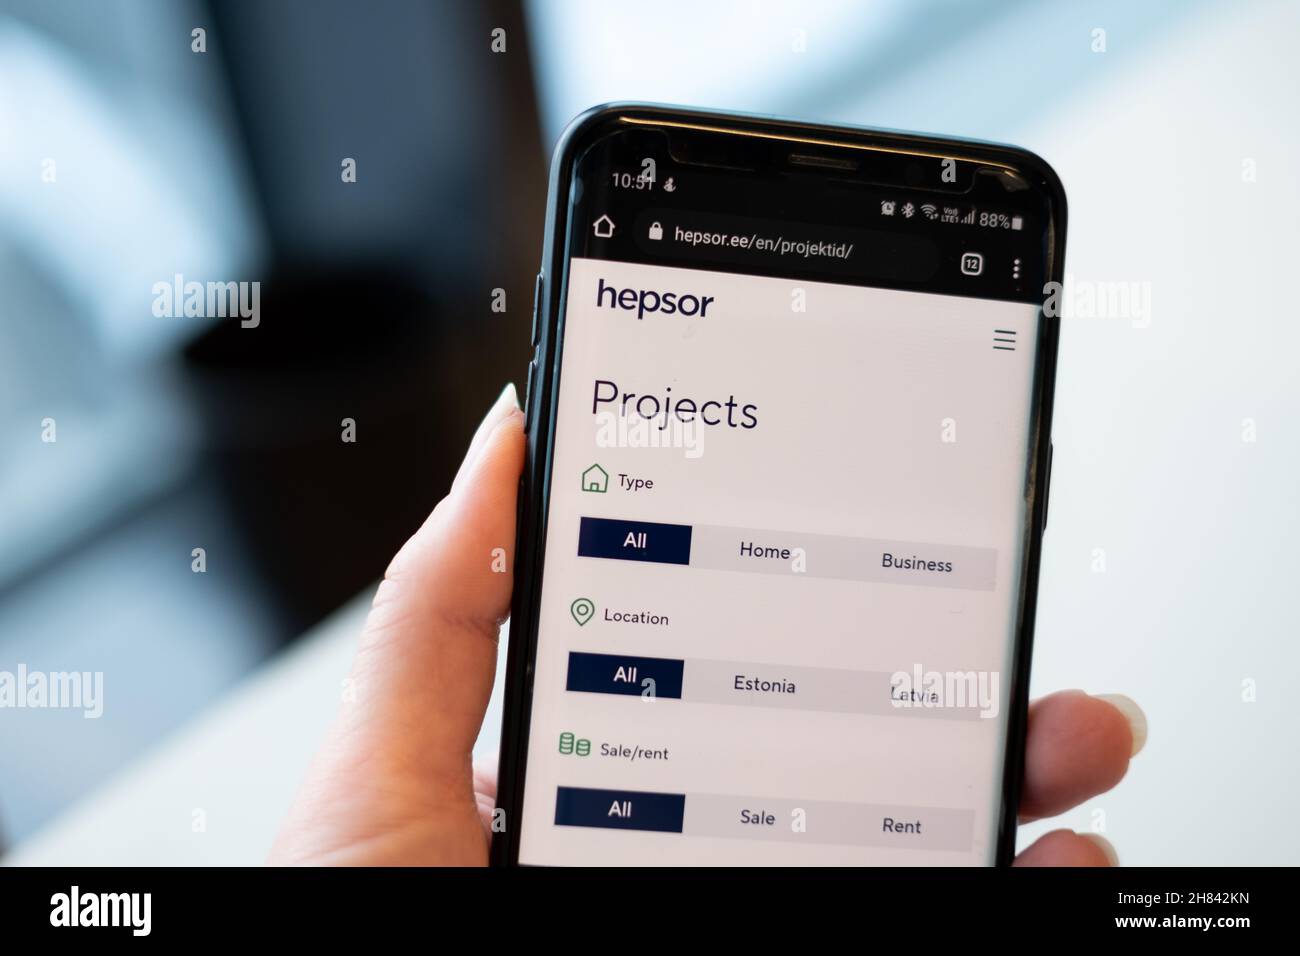 Estonia - 11-23-2021: Hepsor company webpage on phone. Hepsor is real estate developer in Estonia and Latvia. Trading in Nasdaq Baltic Stock Exchange. Stock Photo